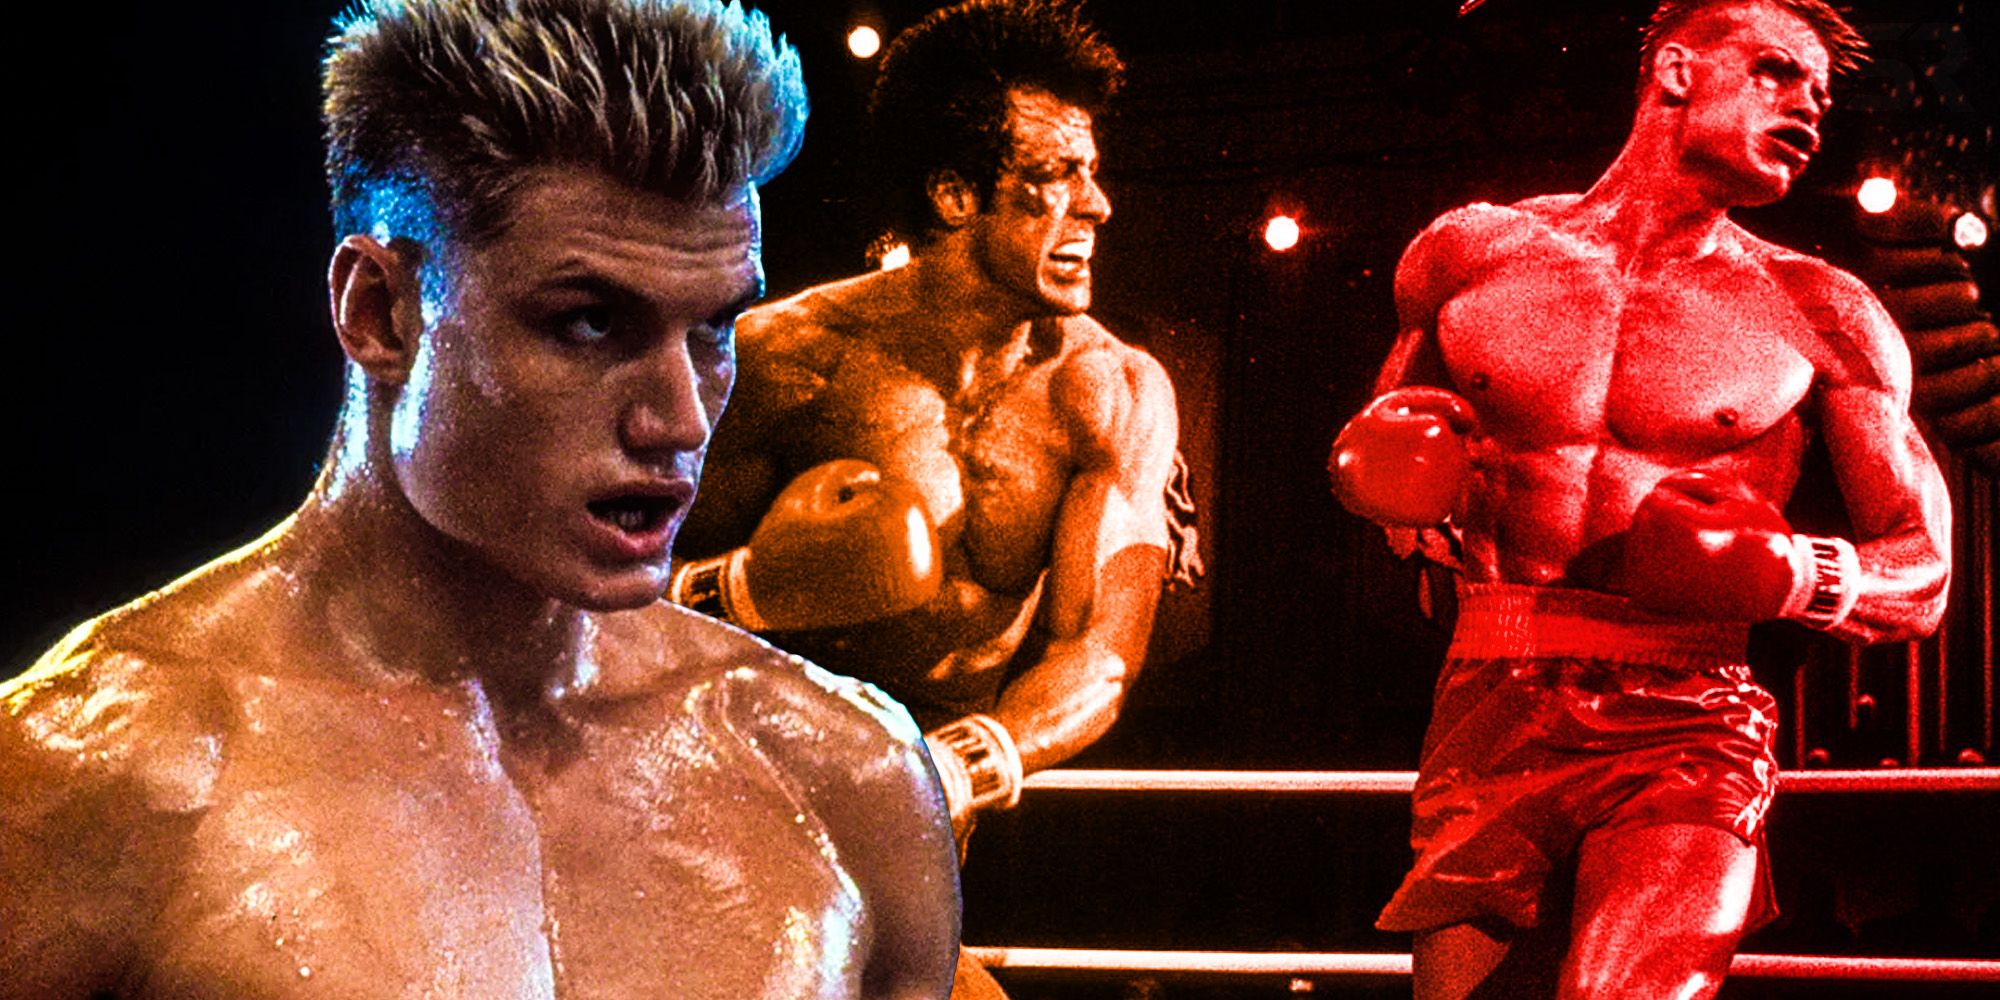 Rocky Balboa v. Ivan Drago 8 x 10 Movie Photo - Dynasty Sports